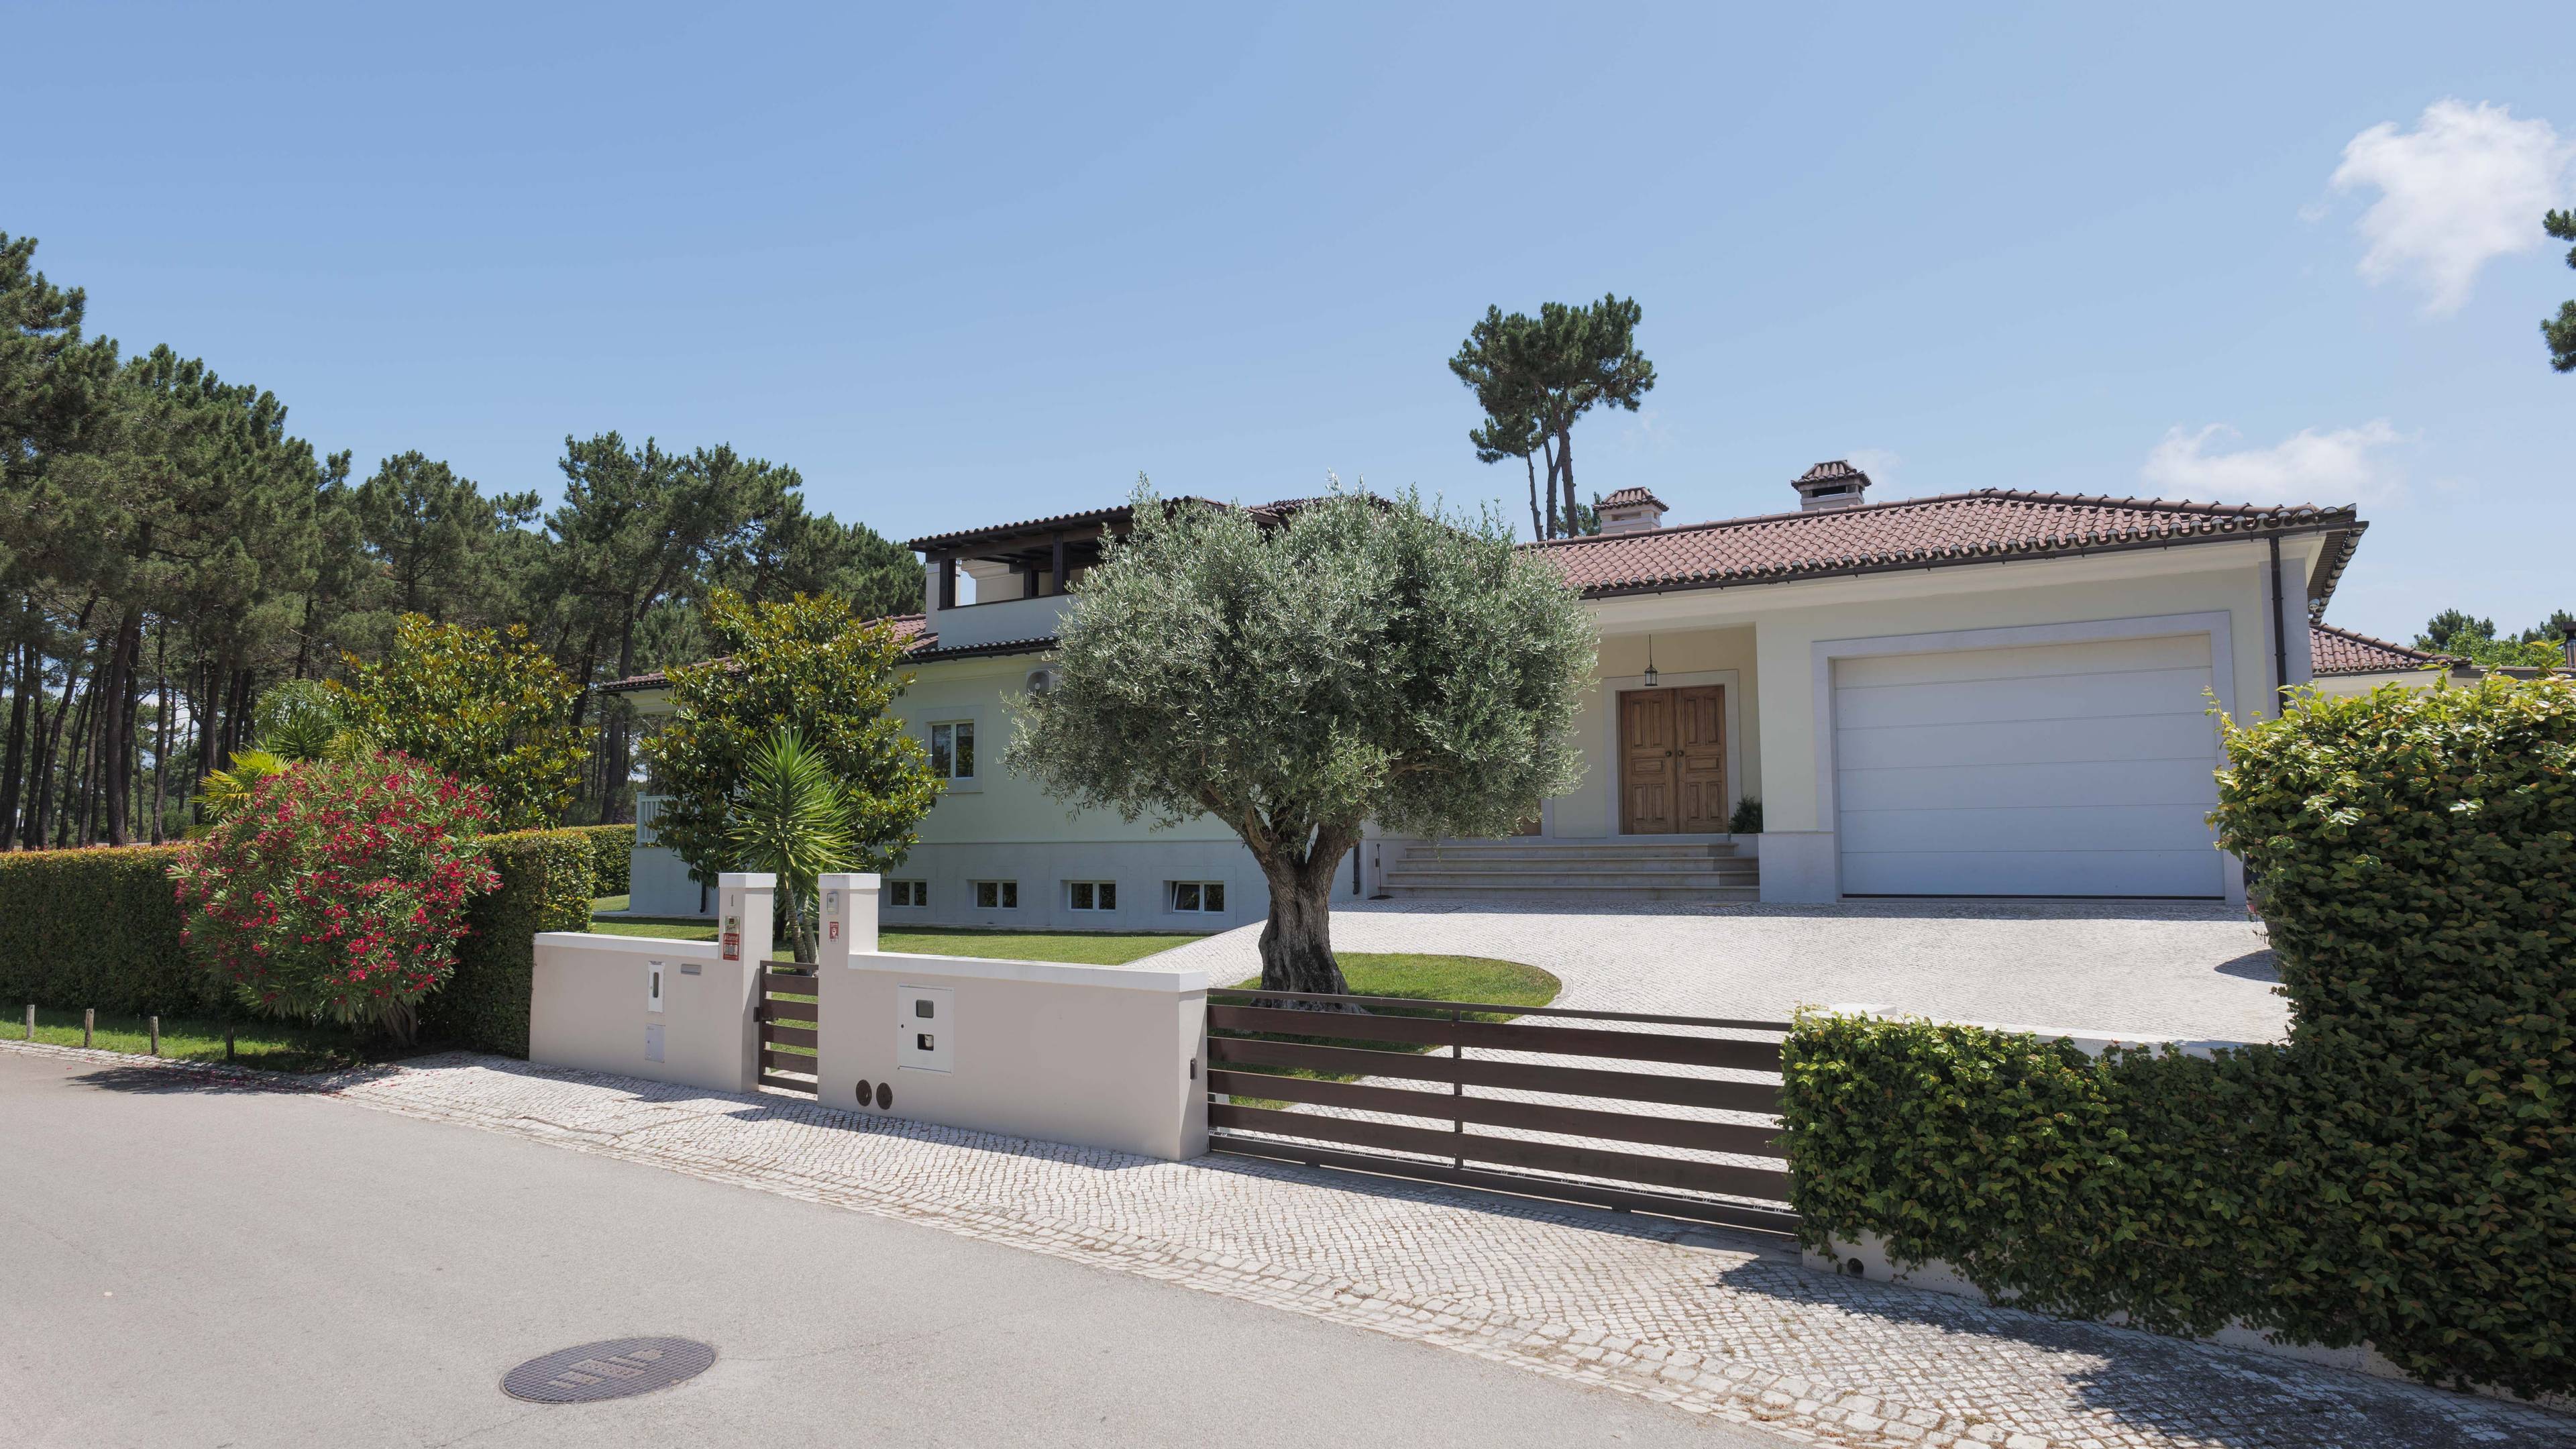 5 Bedroom Classical Style Villa in Herdade de Aroeira Golf Resort | Lisbon South Coast